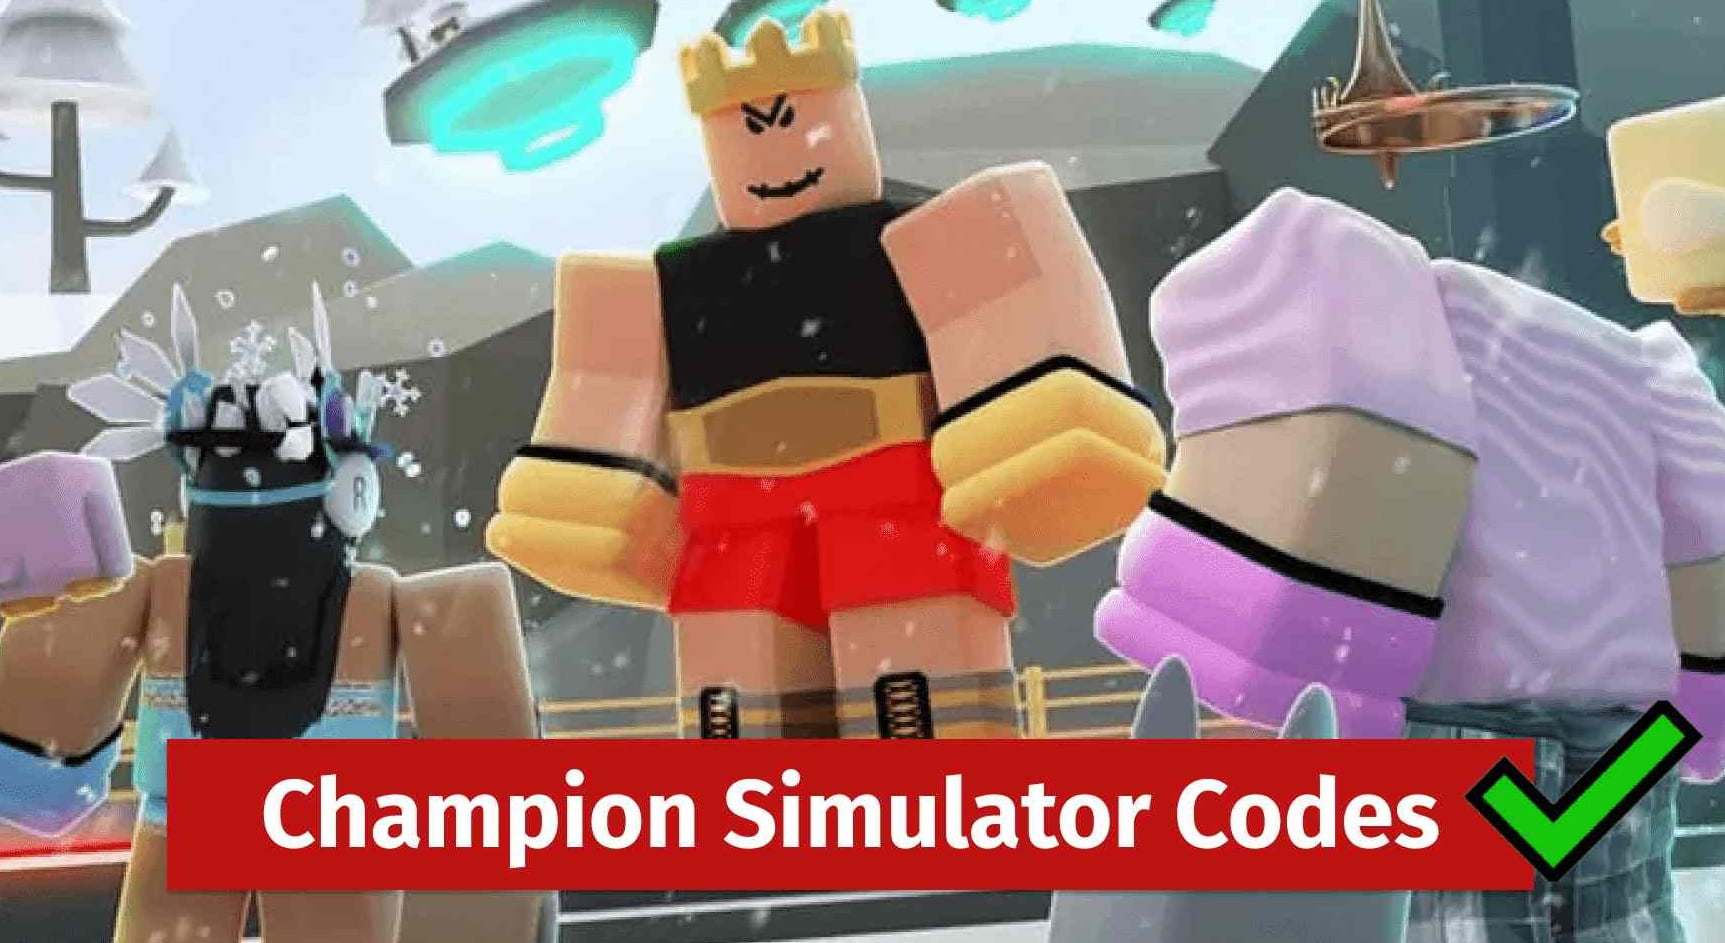 Code Champion Simulator M i Nh t V C ch Nh p Code Minh Vy